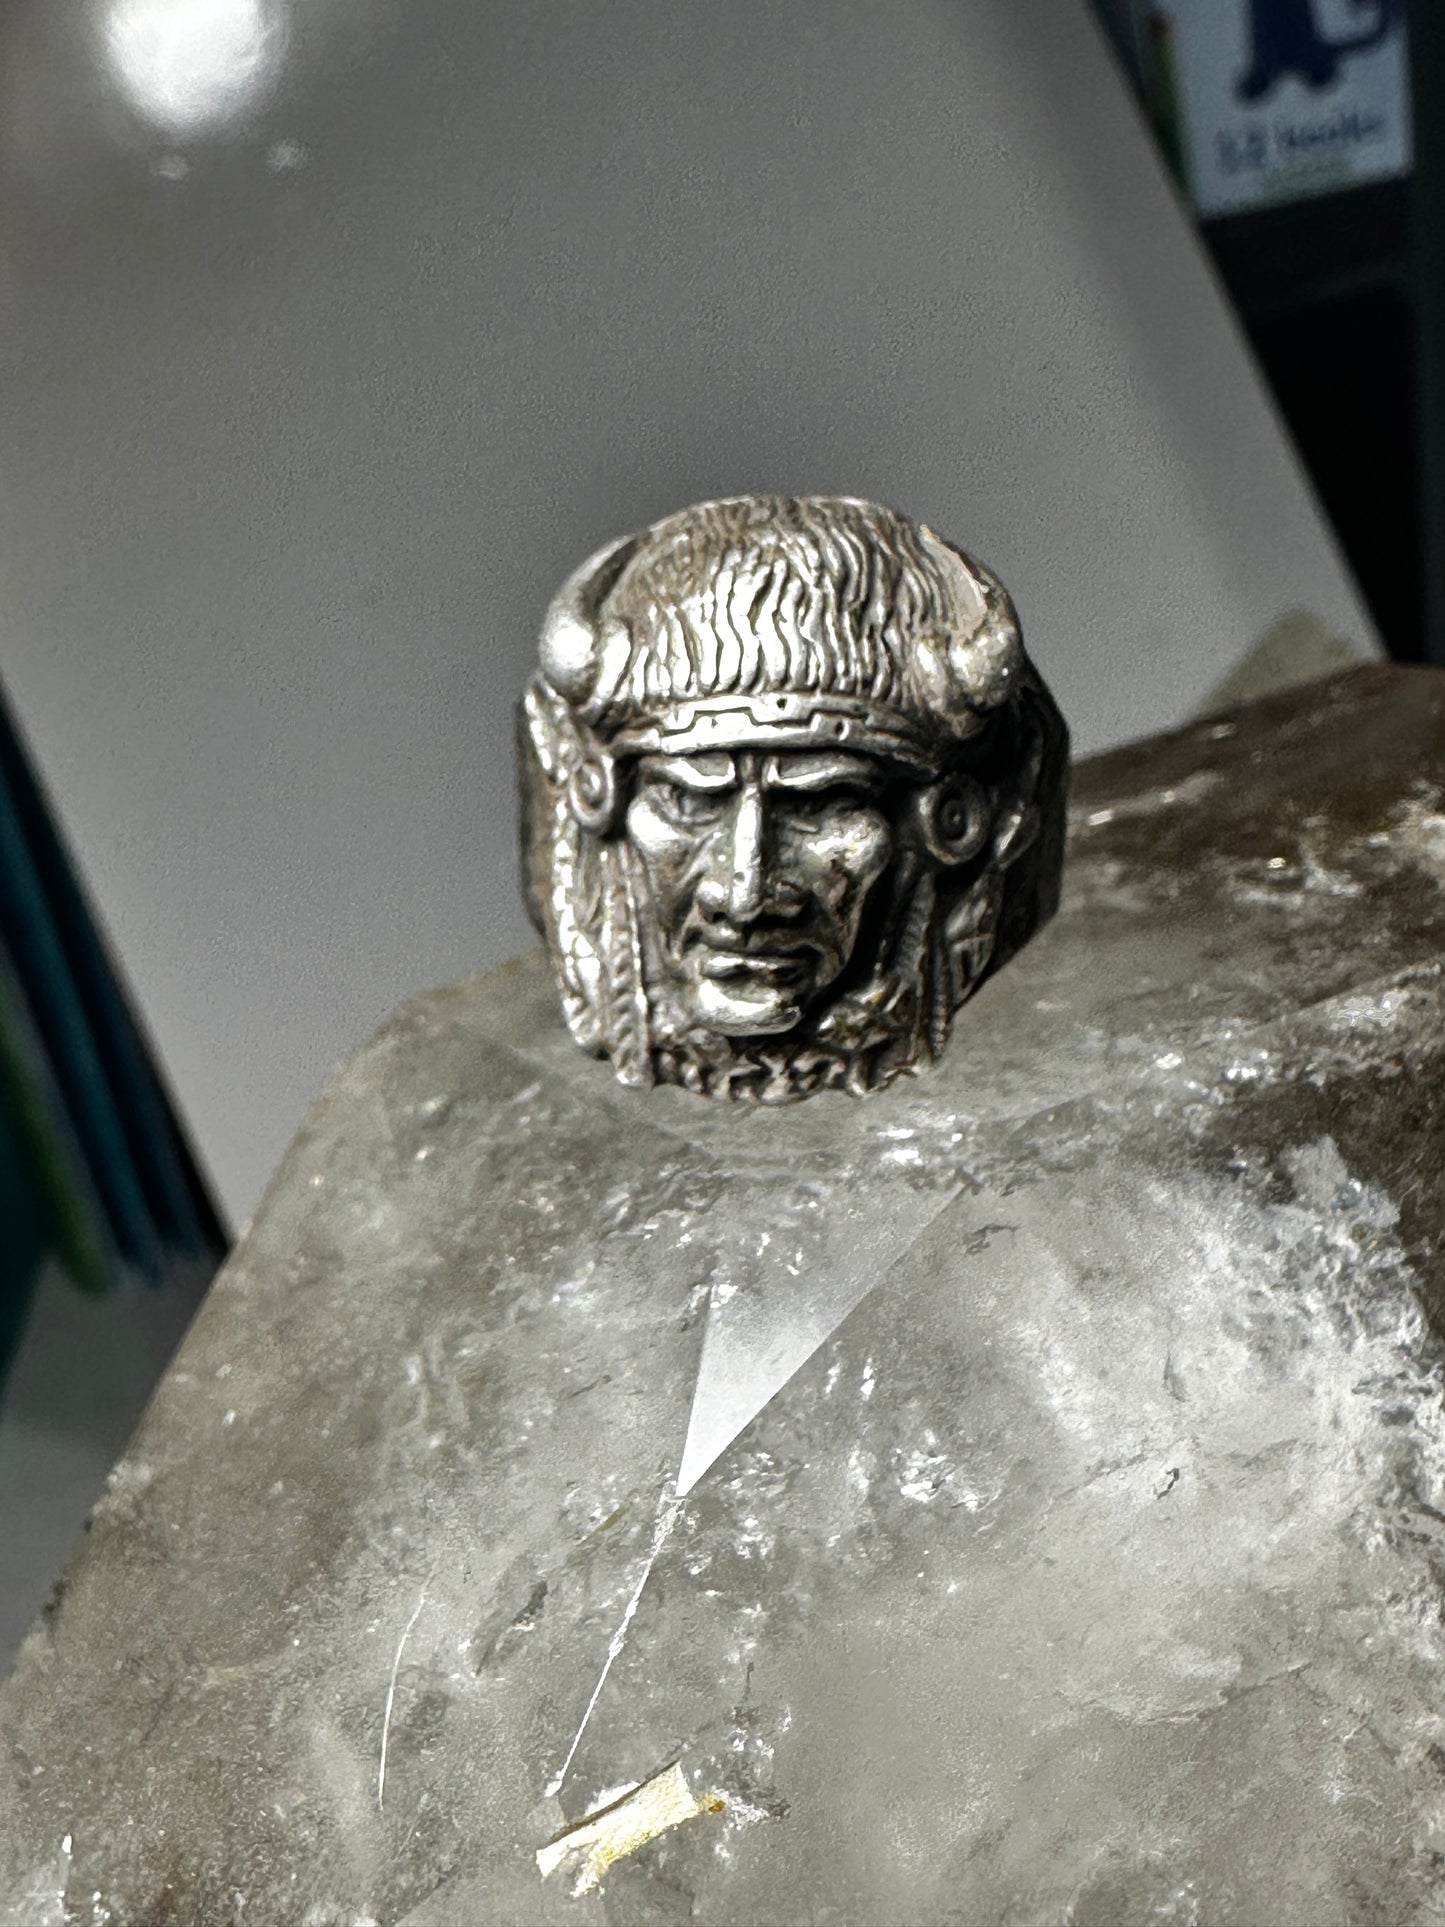 Buffalo headdress ring southwest chief size 10.25  sterling silver men